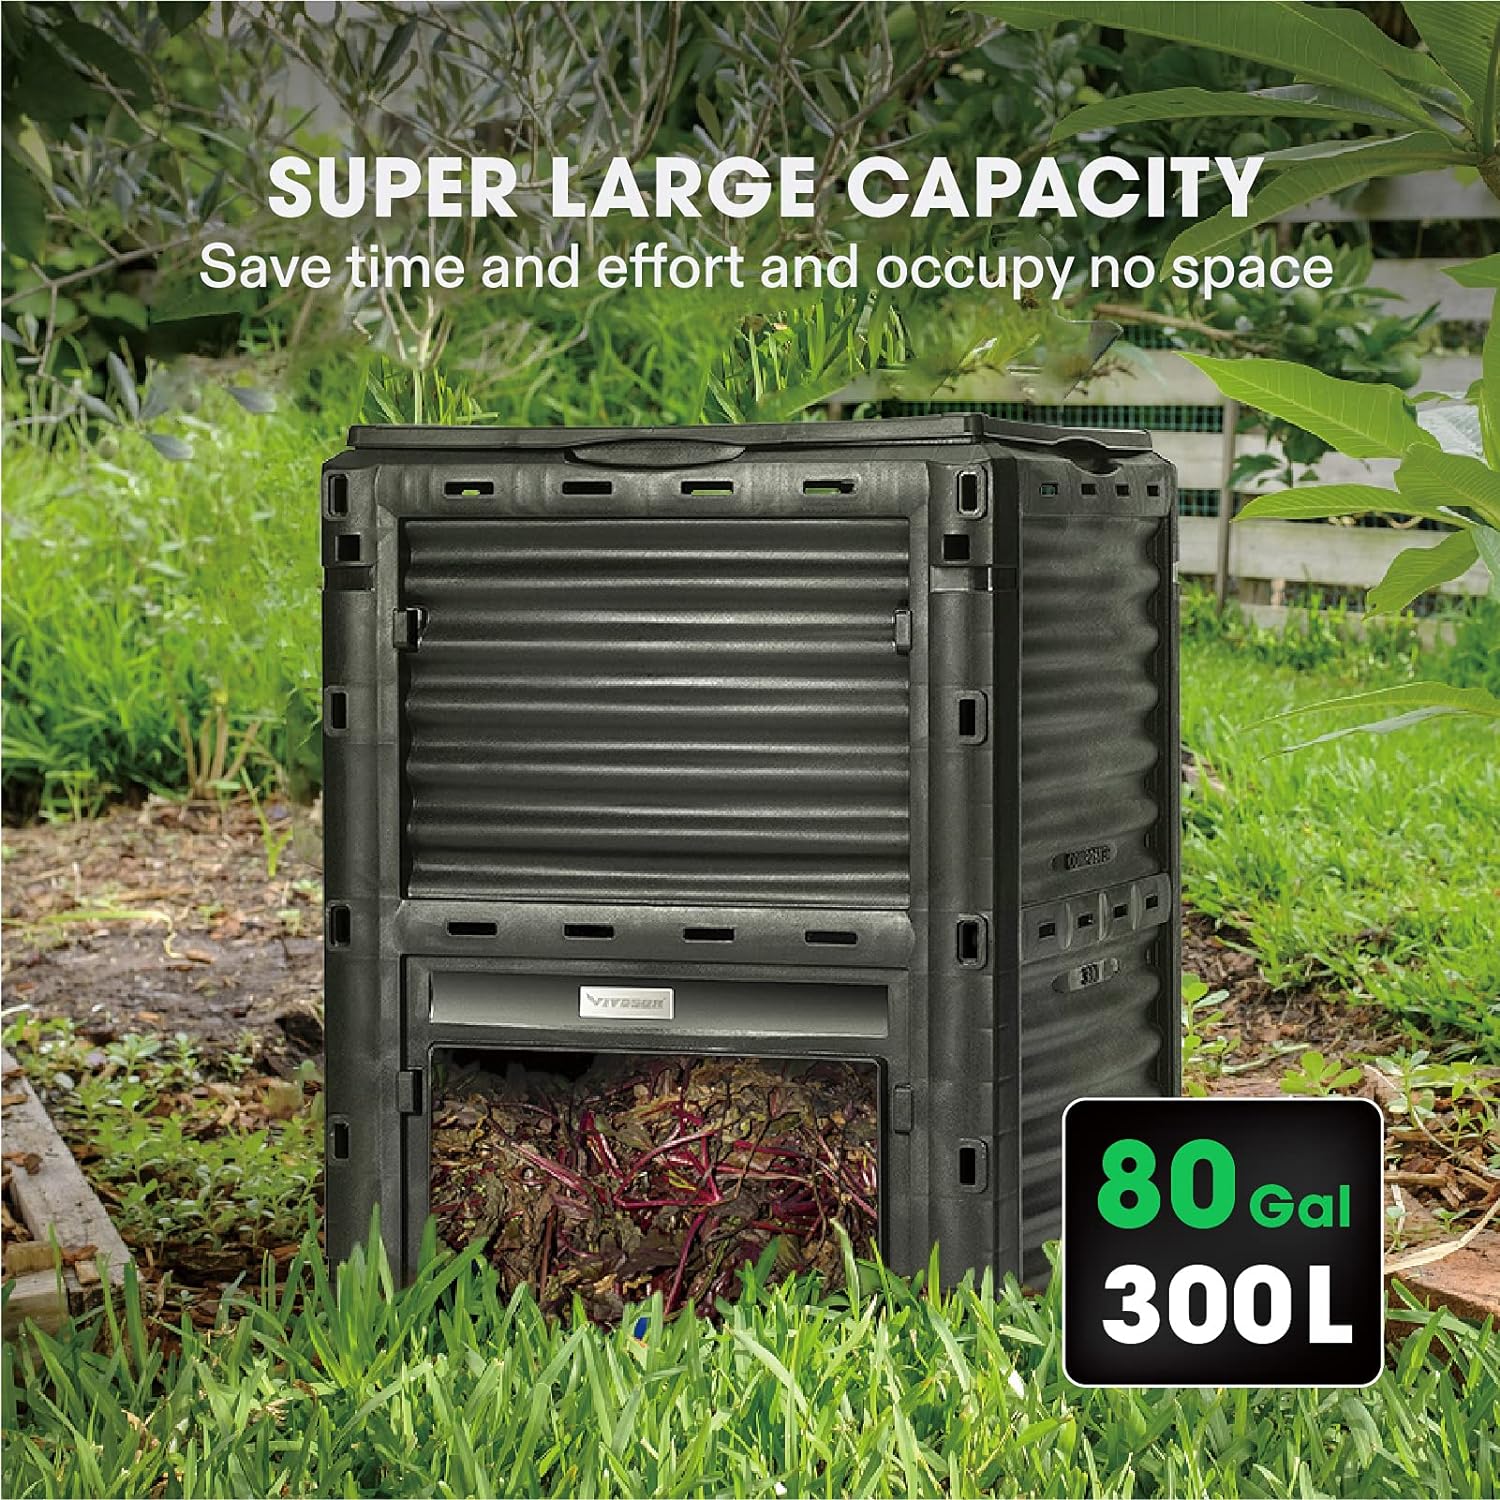 VIVOSUN Compost Bin 80Gallon (300L), Outdoor Composter W/Large Capacity & Easy Assembling, Compost Barrel for Fast Creation of Fertile Soil